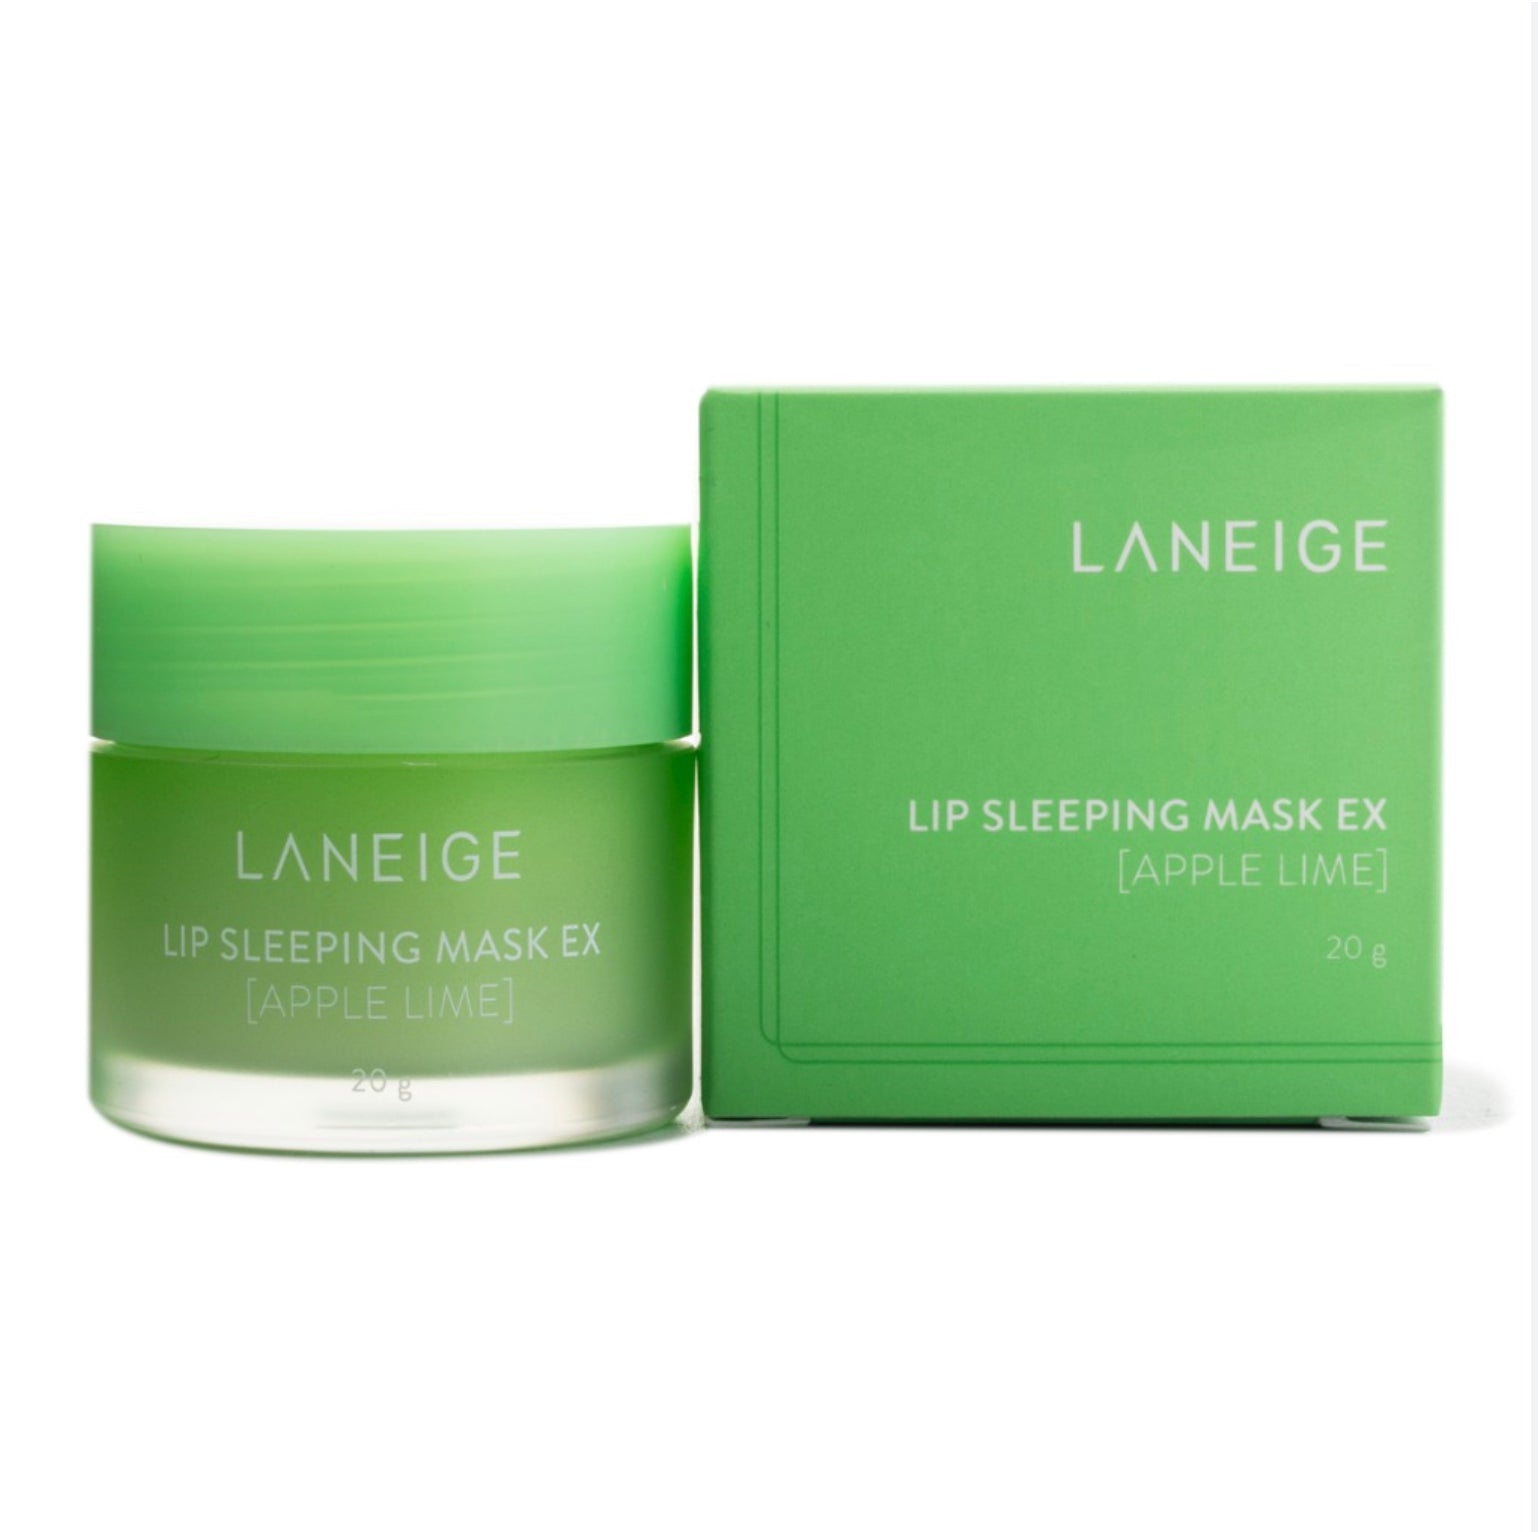 LANEIGE	Lip Sleeping Mask EX, Apple Lime, 20g